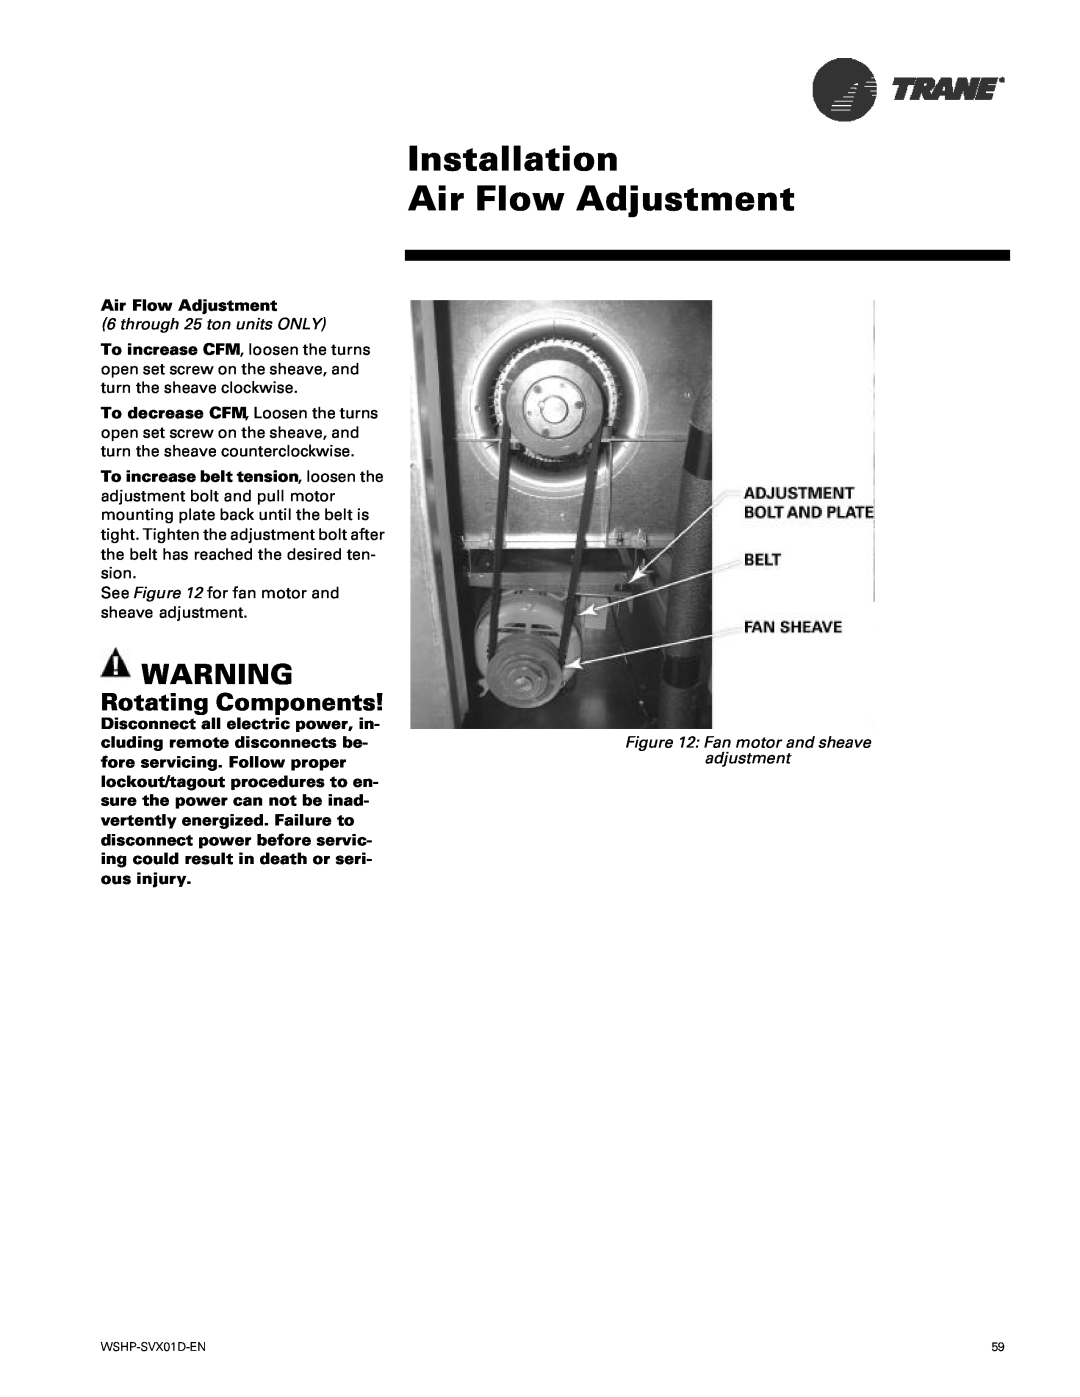 Trane GEV, GEH manual Rotating Components, Installation Air Flow Adjustment 